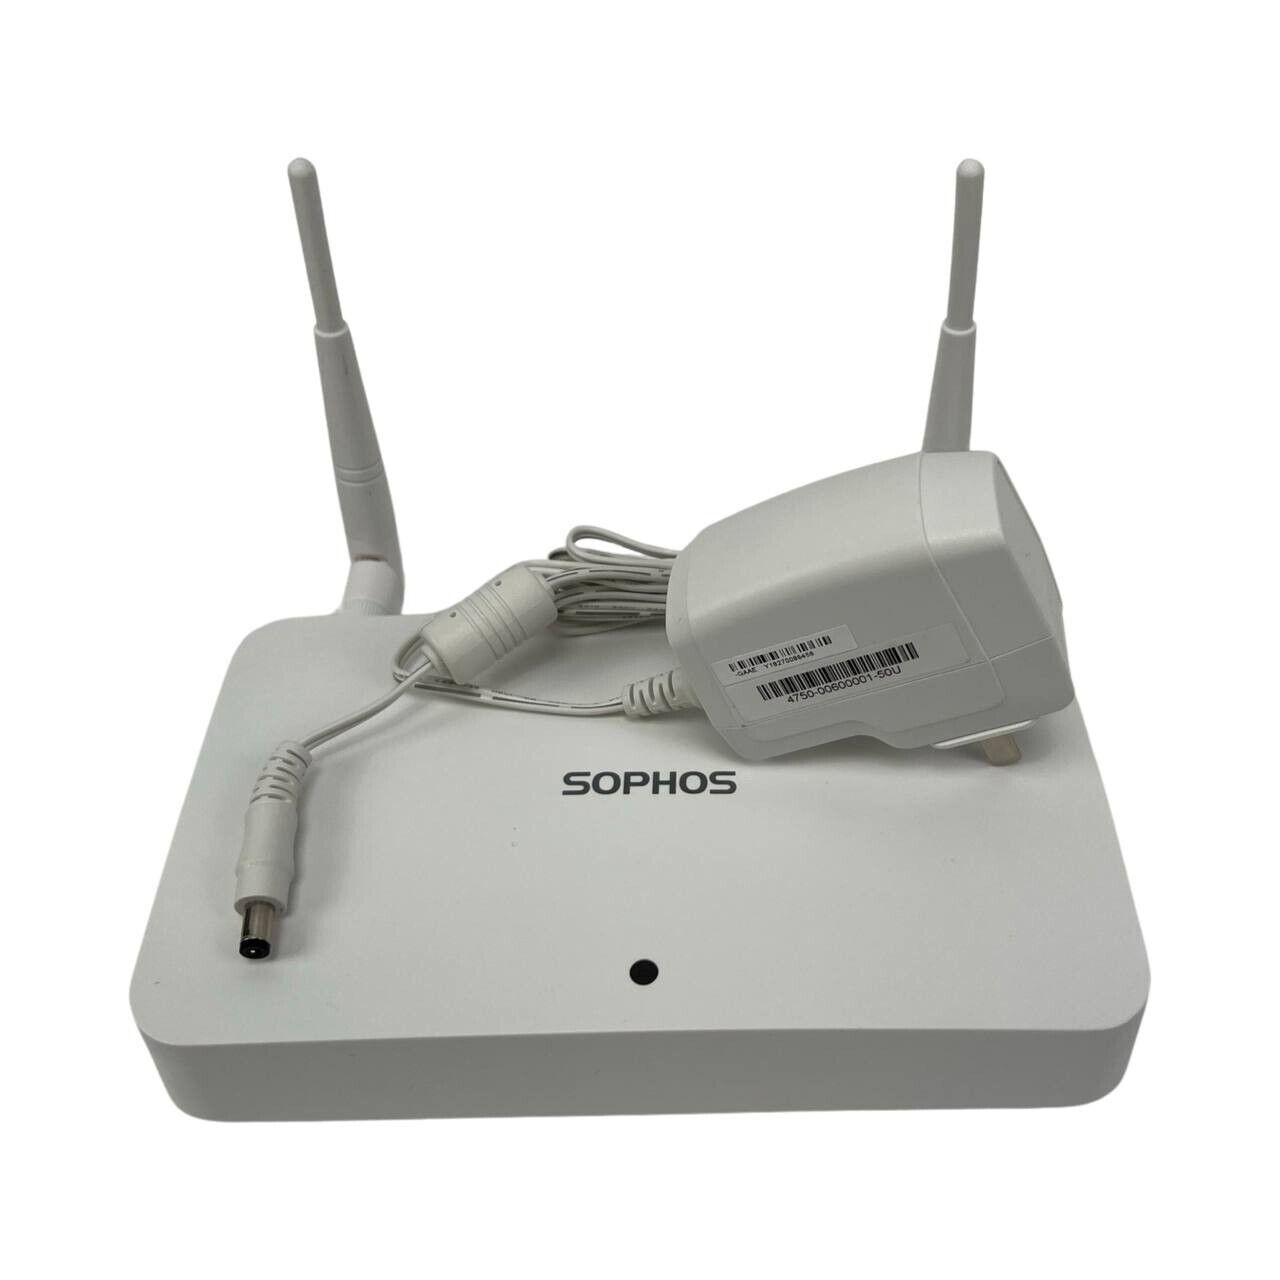 Sophos AP 15 Wireless AP 802.11ac Dual Band/Radio | Tested